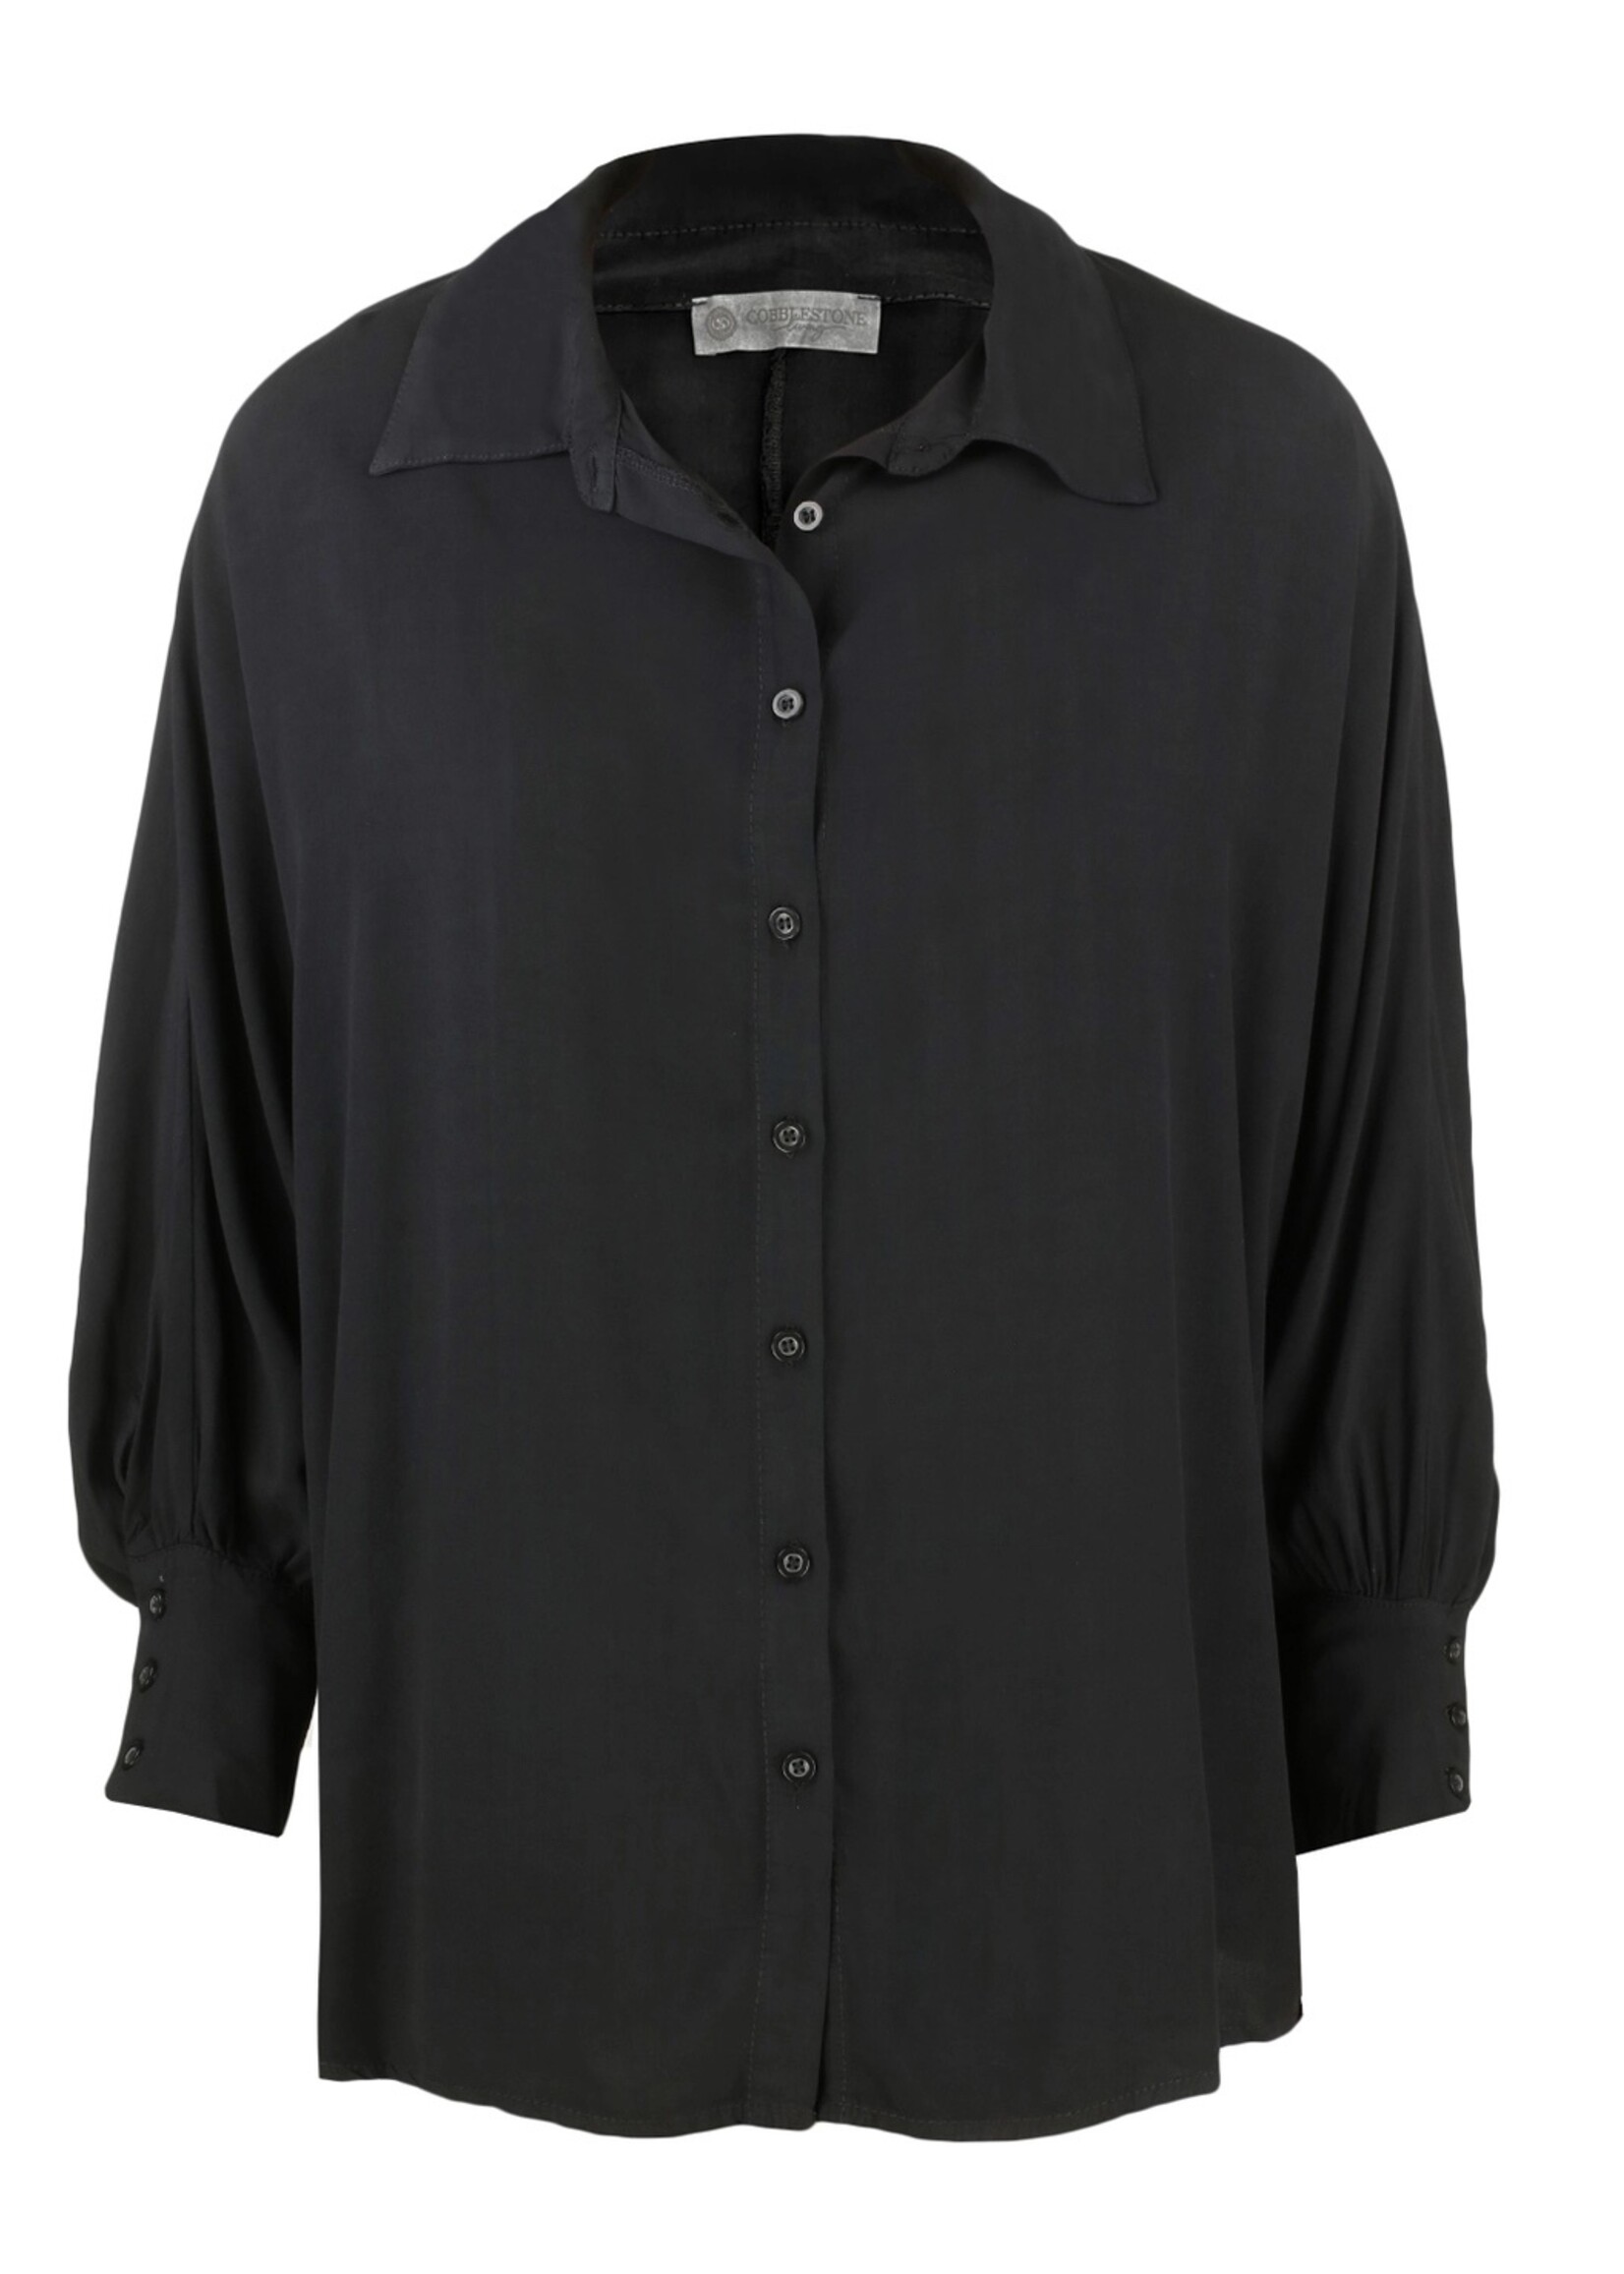 CobbleStone Living Remi Collared Button-Up Shirt